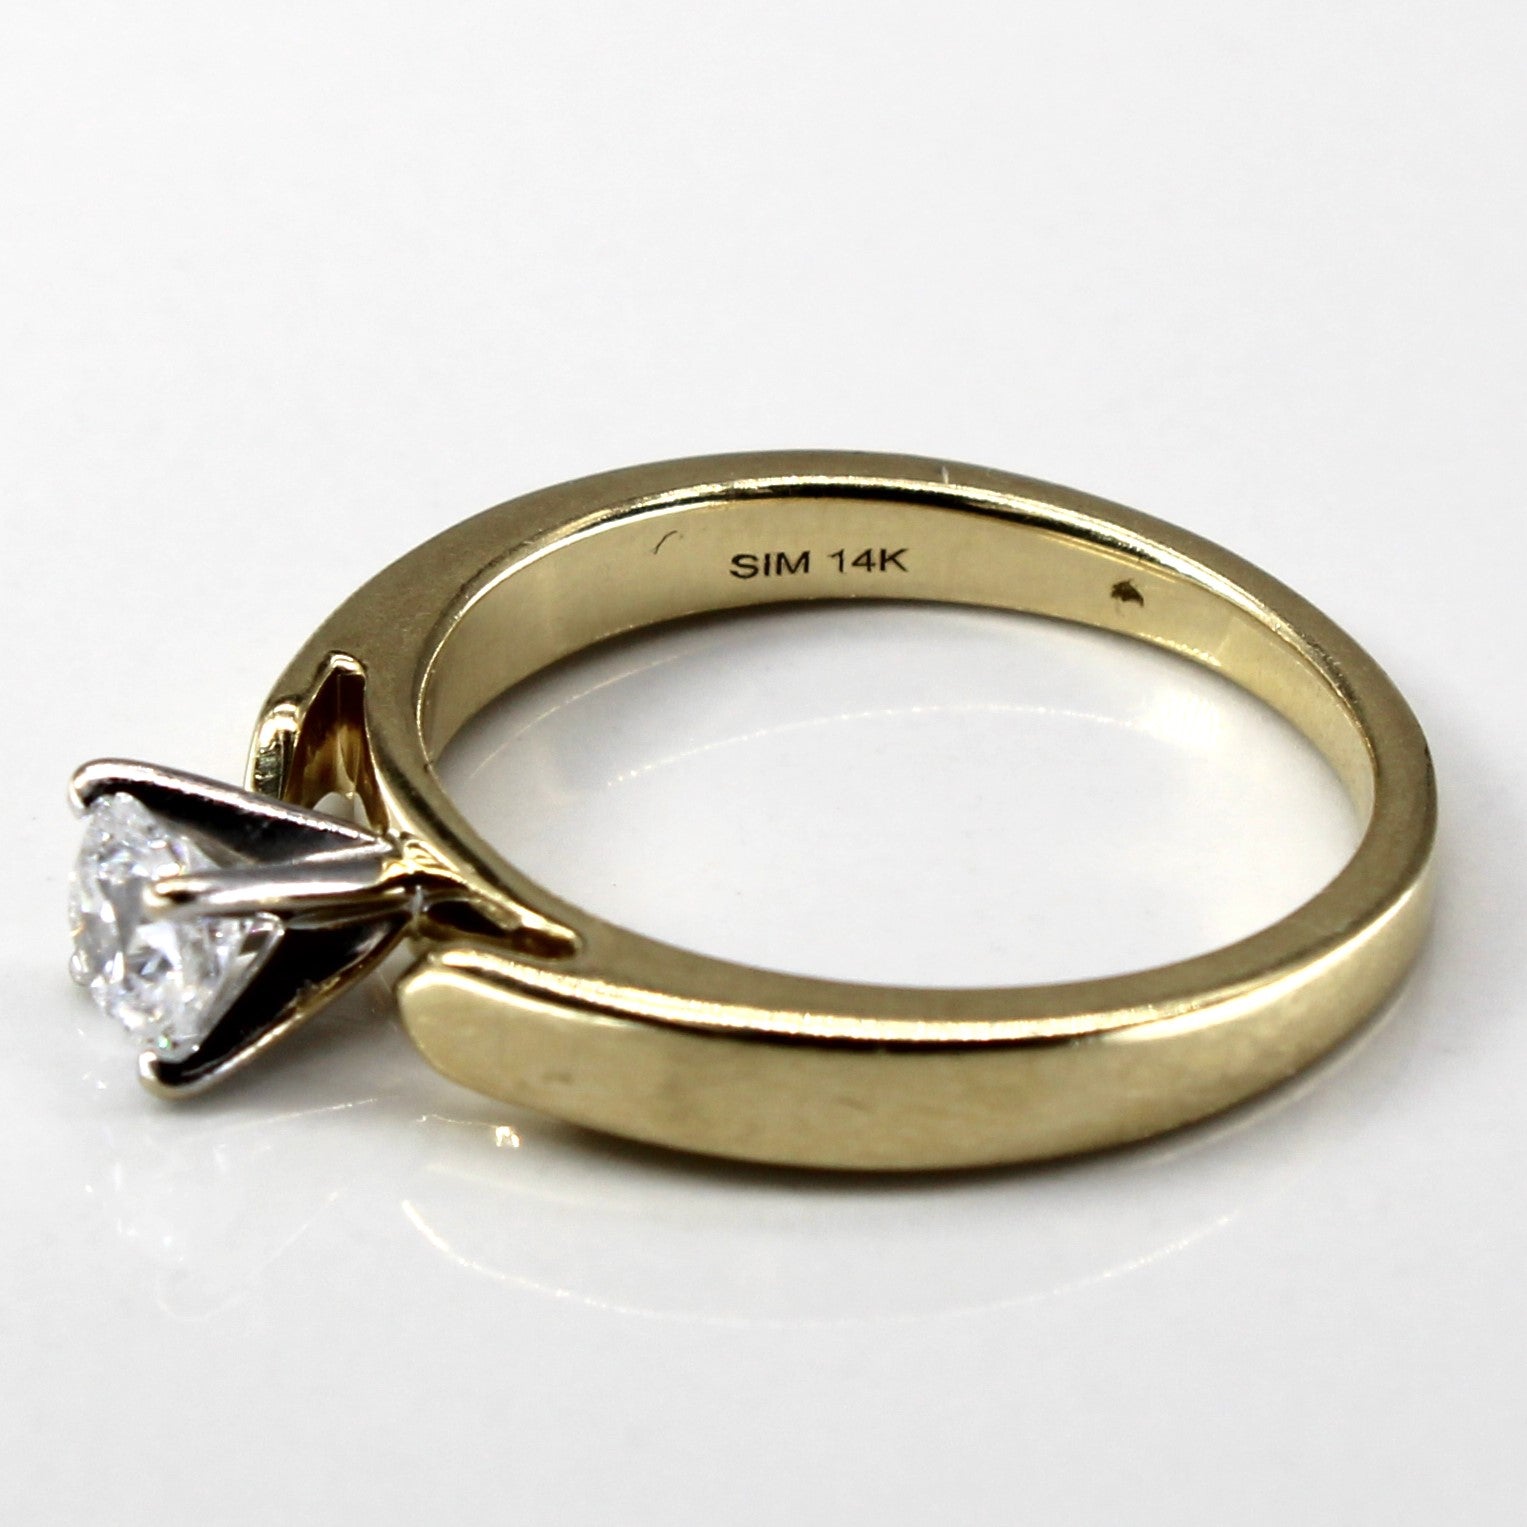 Solitaire Diamond 14k Ring | 0.50ct | SZ 7 |